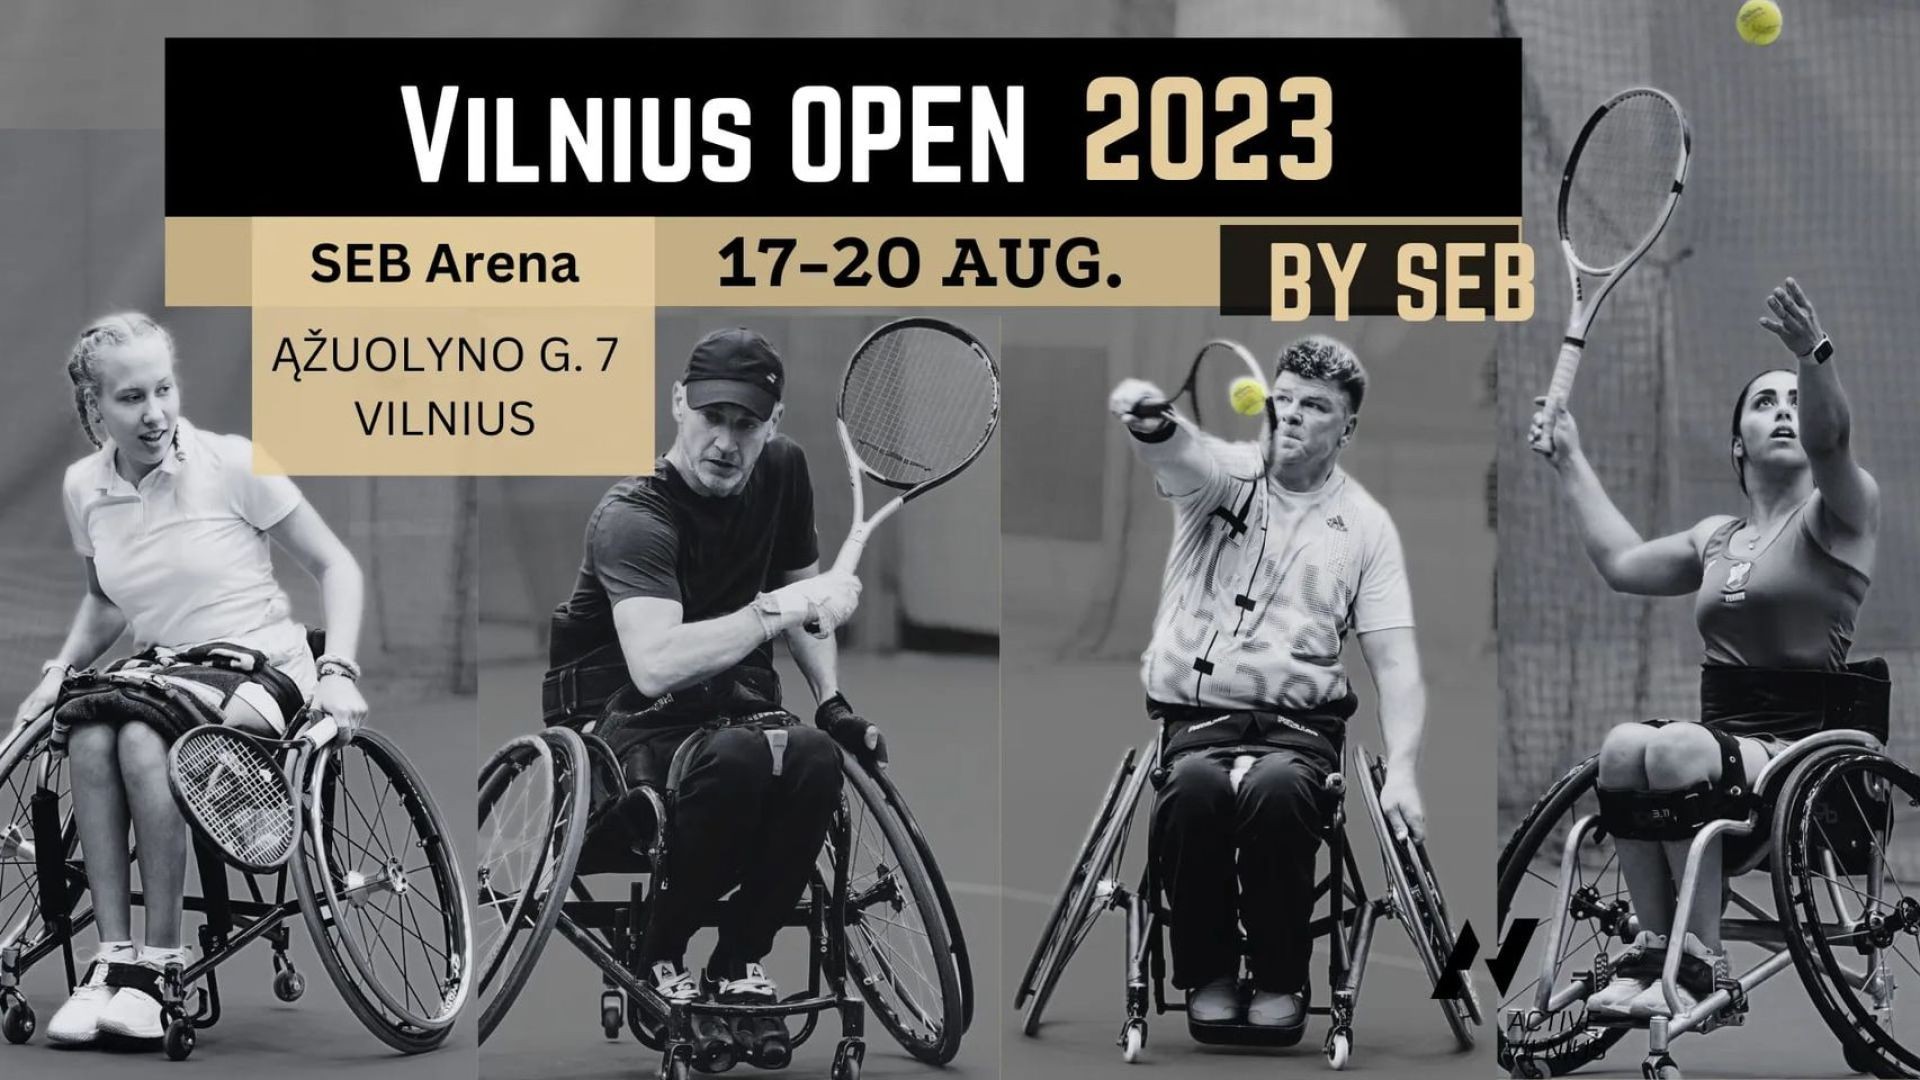 COURT 6 DAY 2 - VILNIIUS OPEN 2023 BY SEB